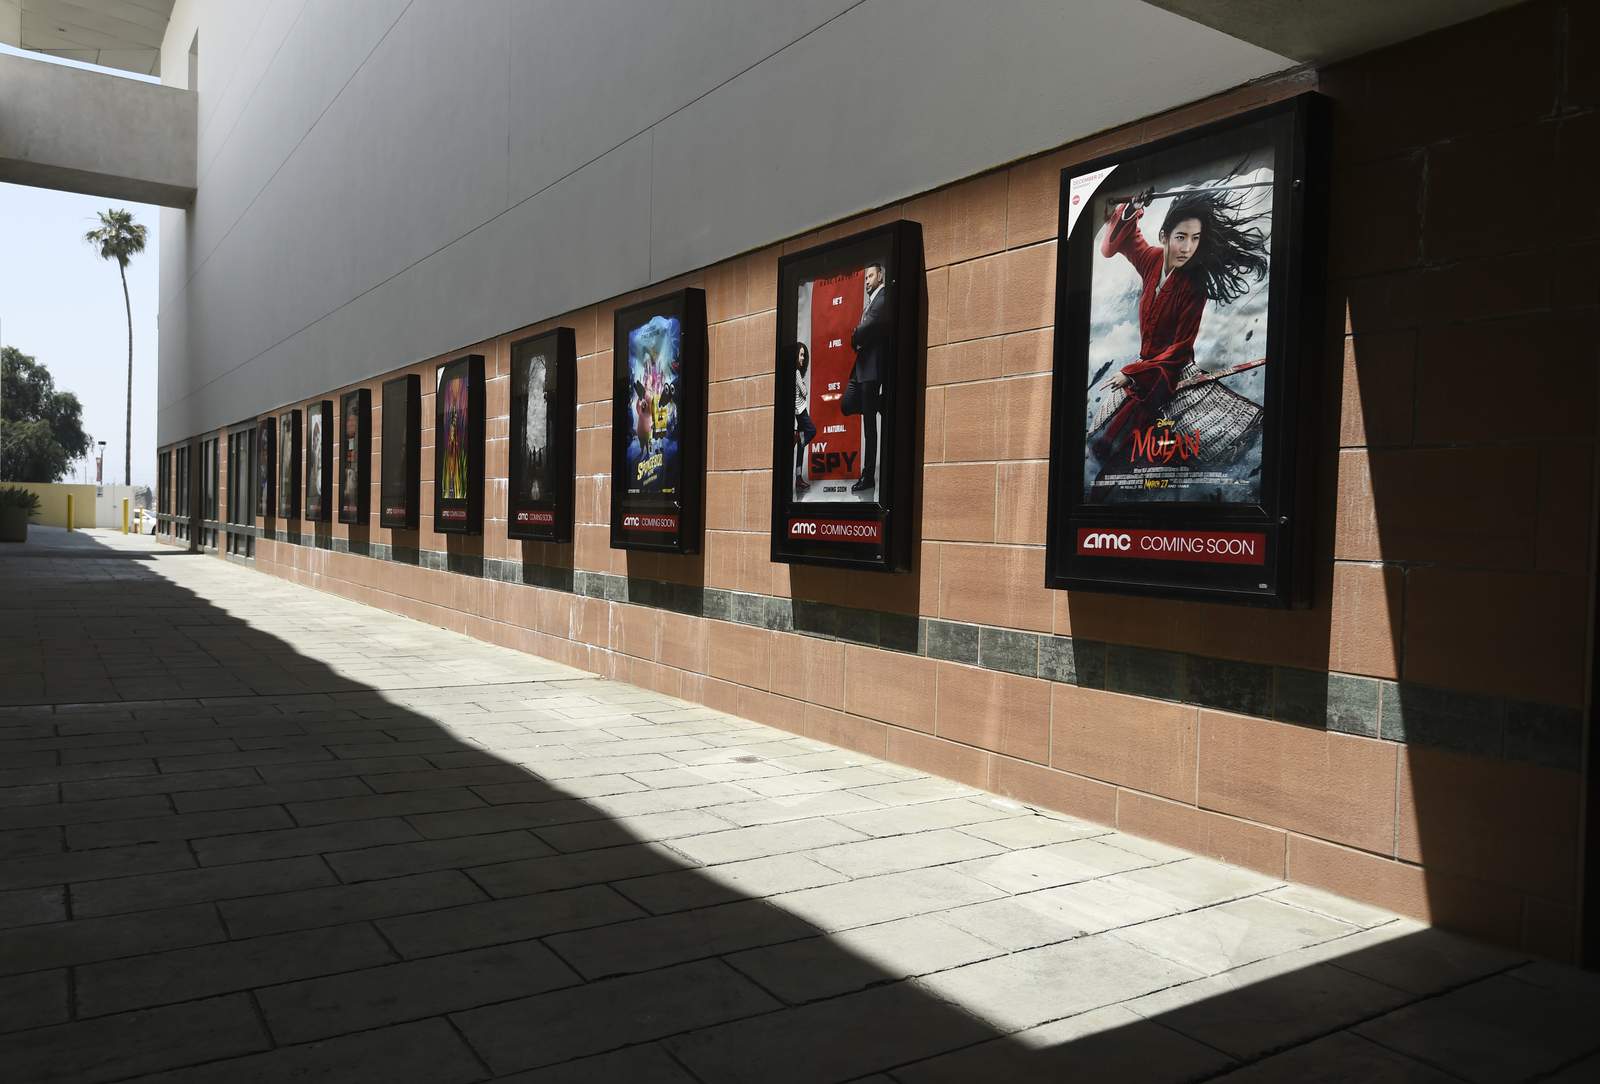 Movie theaters implore studios: Release the blockbusters